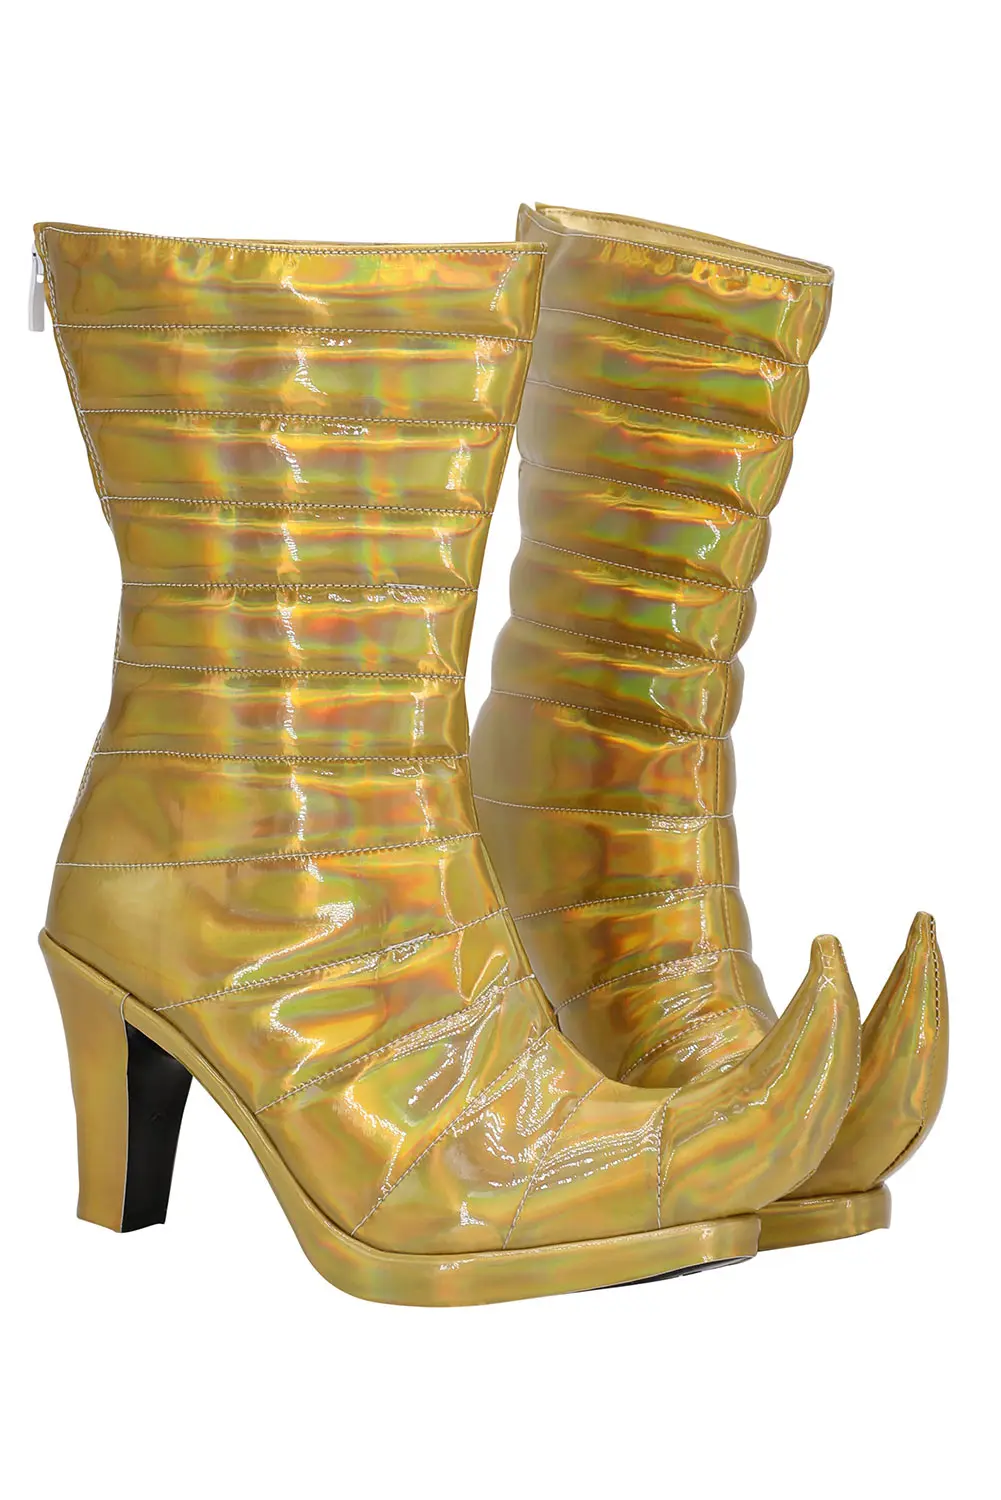 JoJo's Bizarre Adventure Dio Brando Cosplay Shoes Boots Halloween Carnival Party Costumes Accessory Size - AliExpress